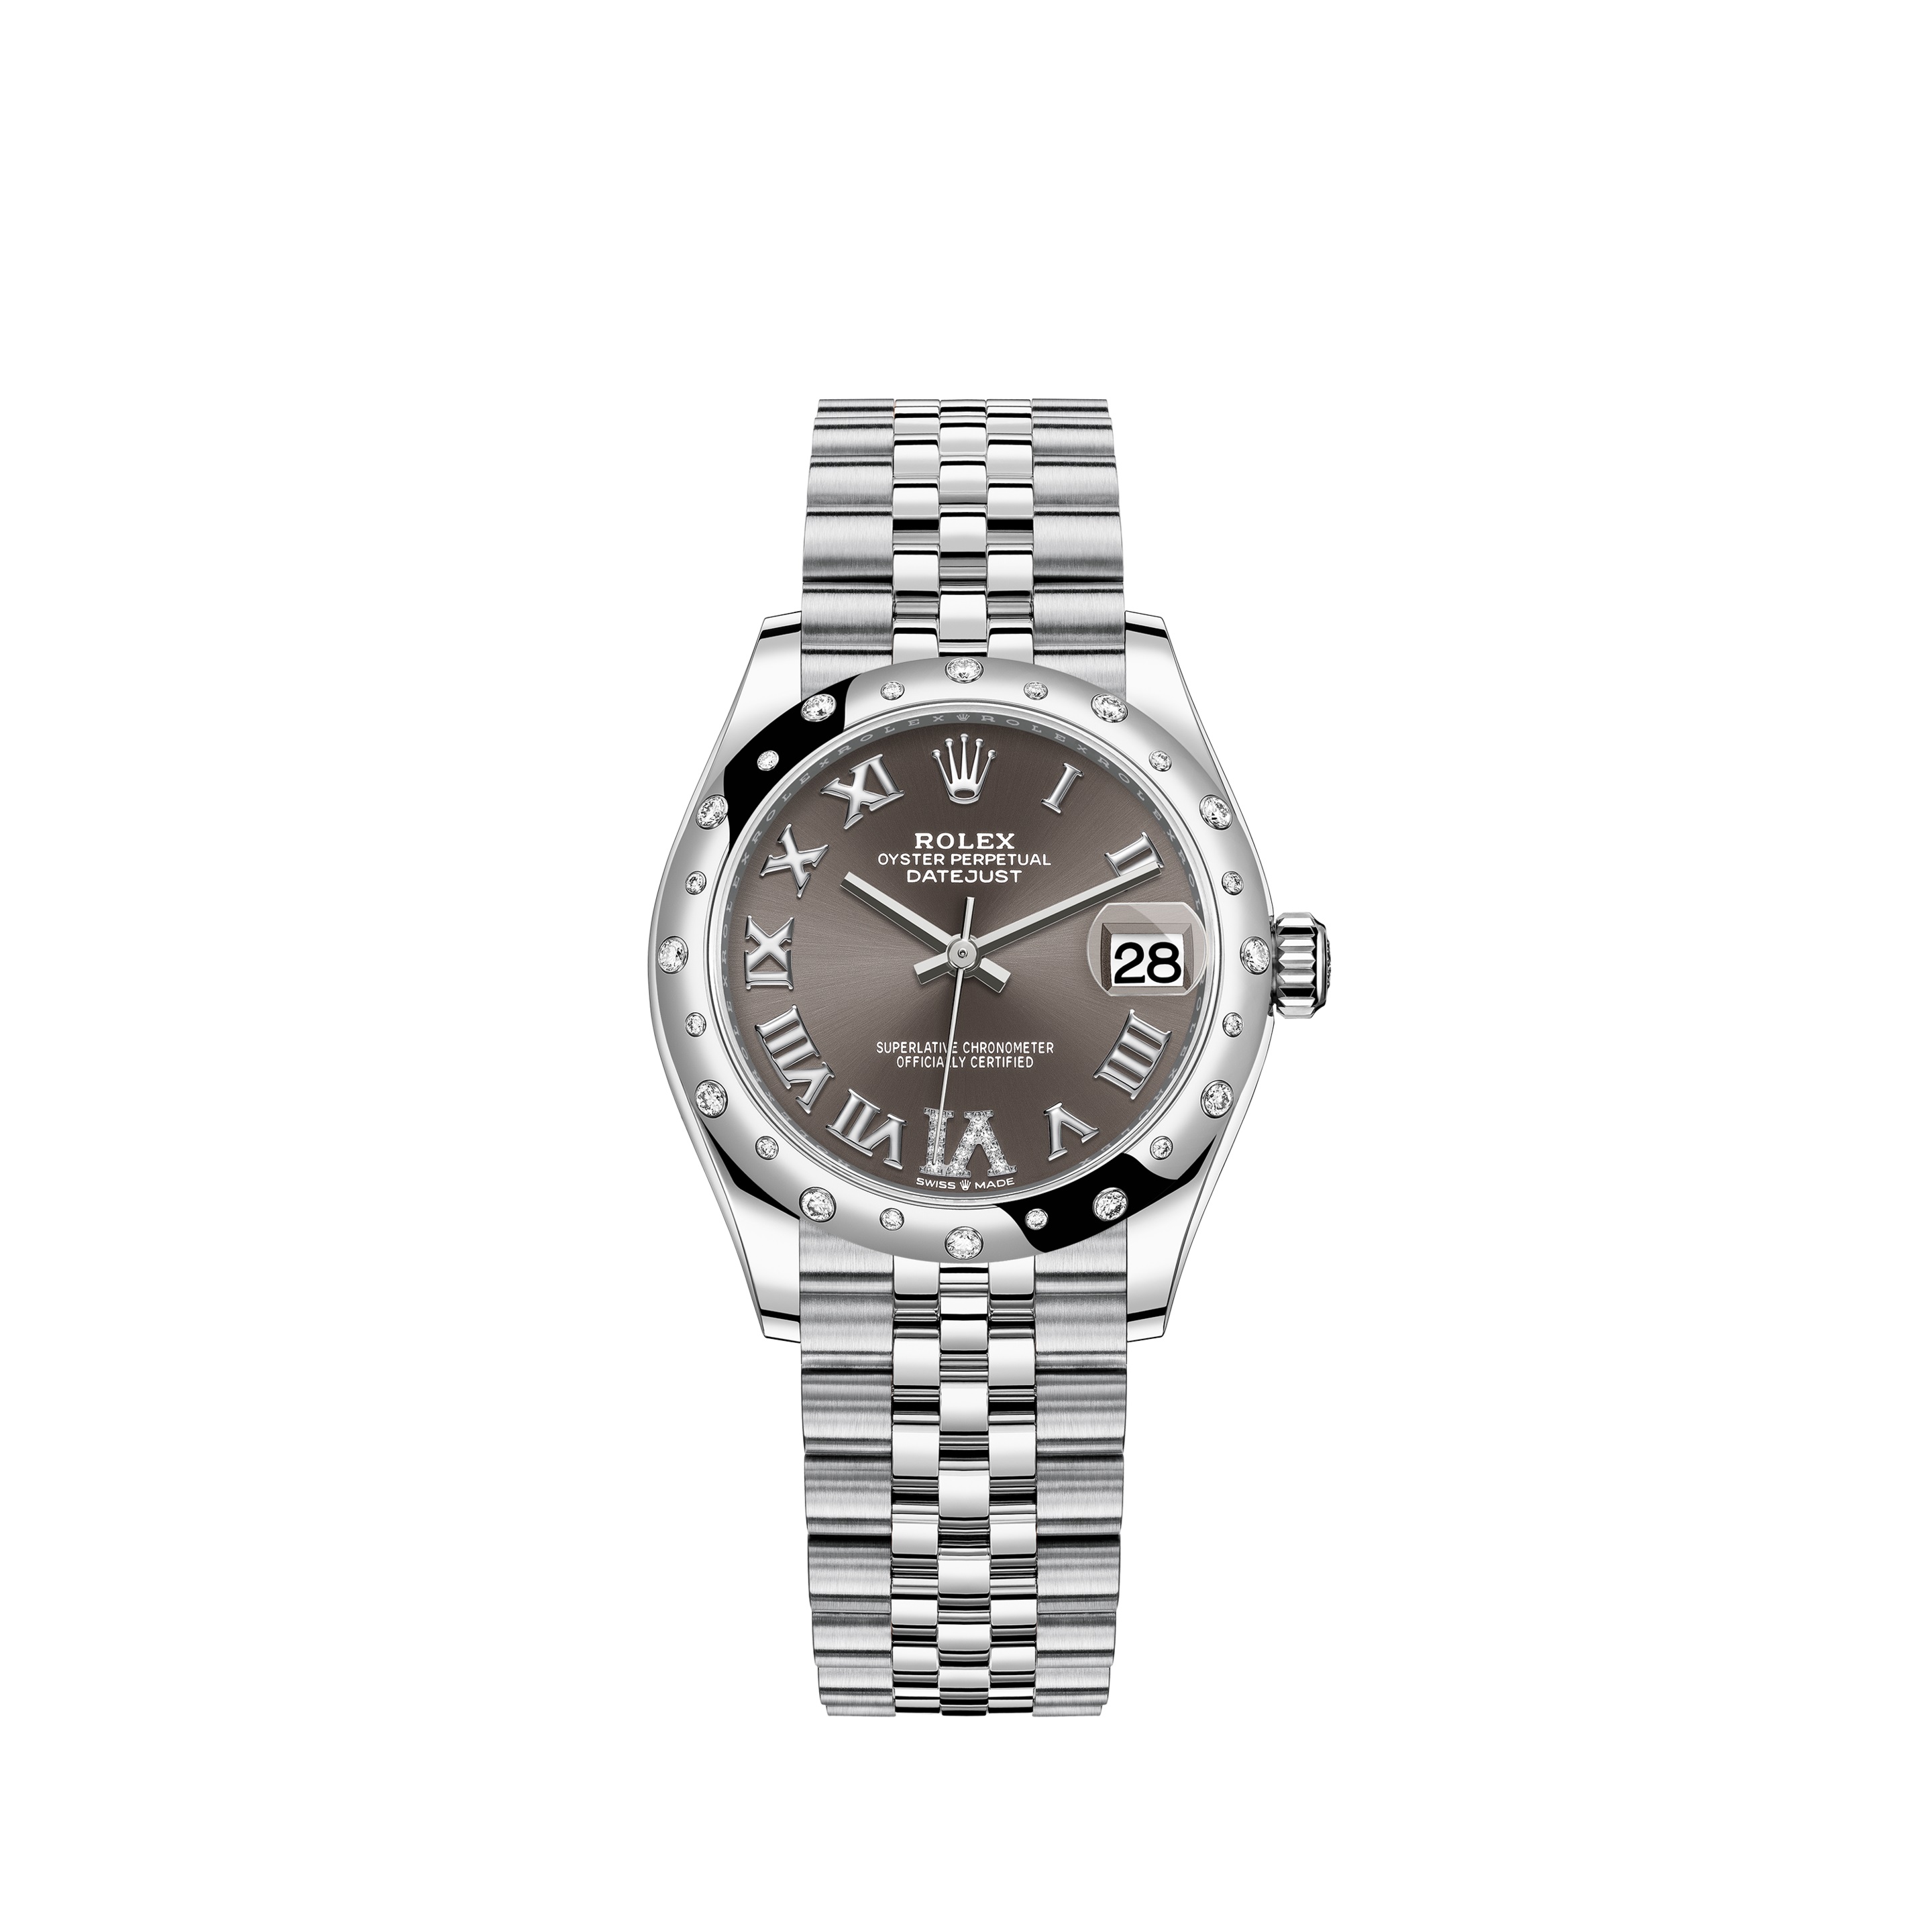 Datejust 31 278344RBR White Gold & Stainless Steel Watch (Dark Grey Set with Diamonds)